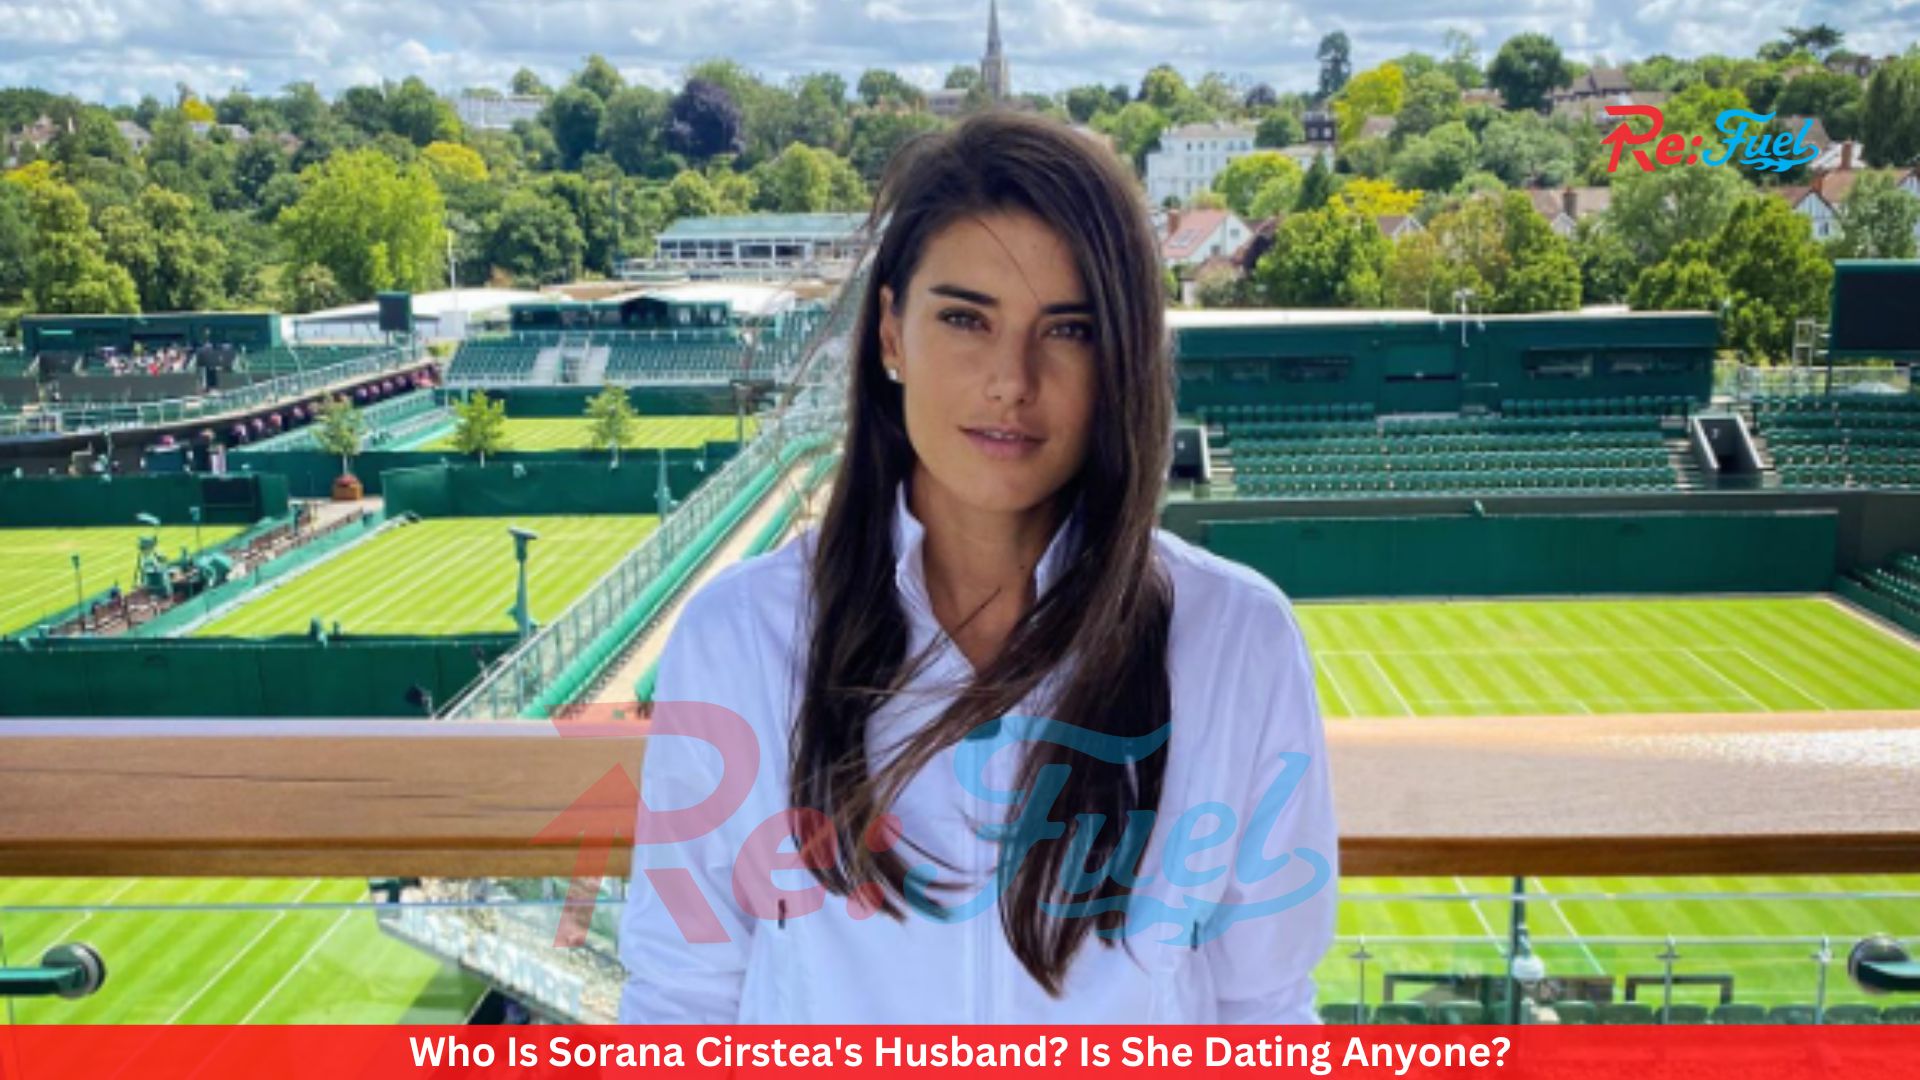 Who Is Sorana Cirstea's Husband? Is She Dating Anyone?